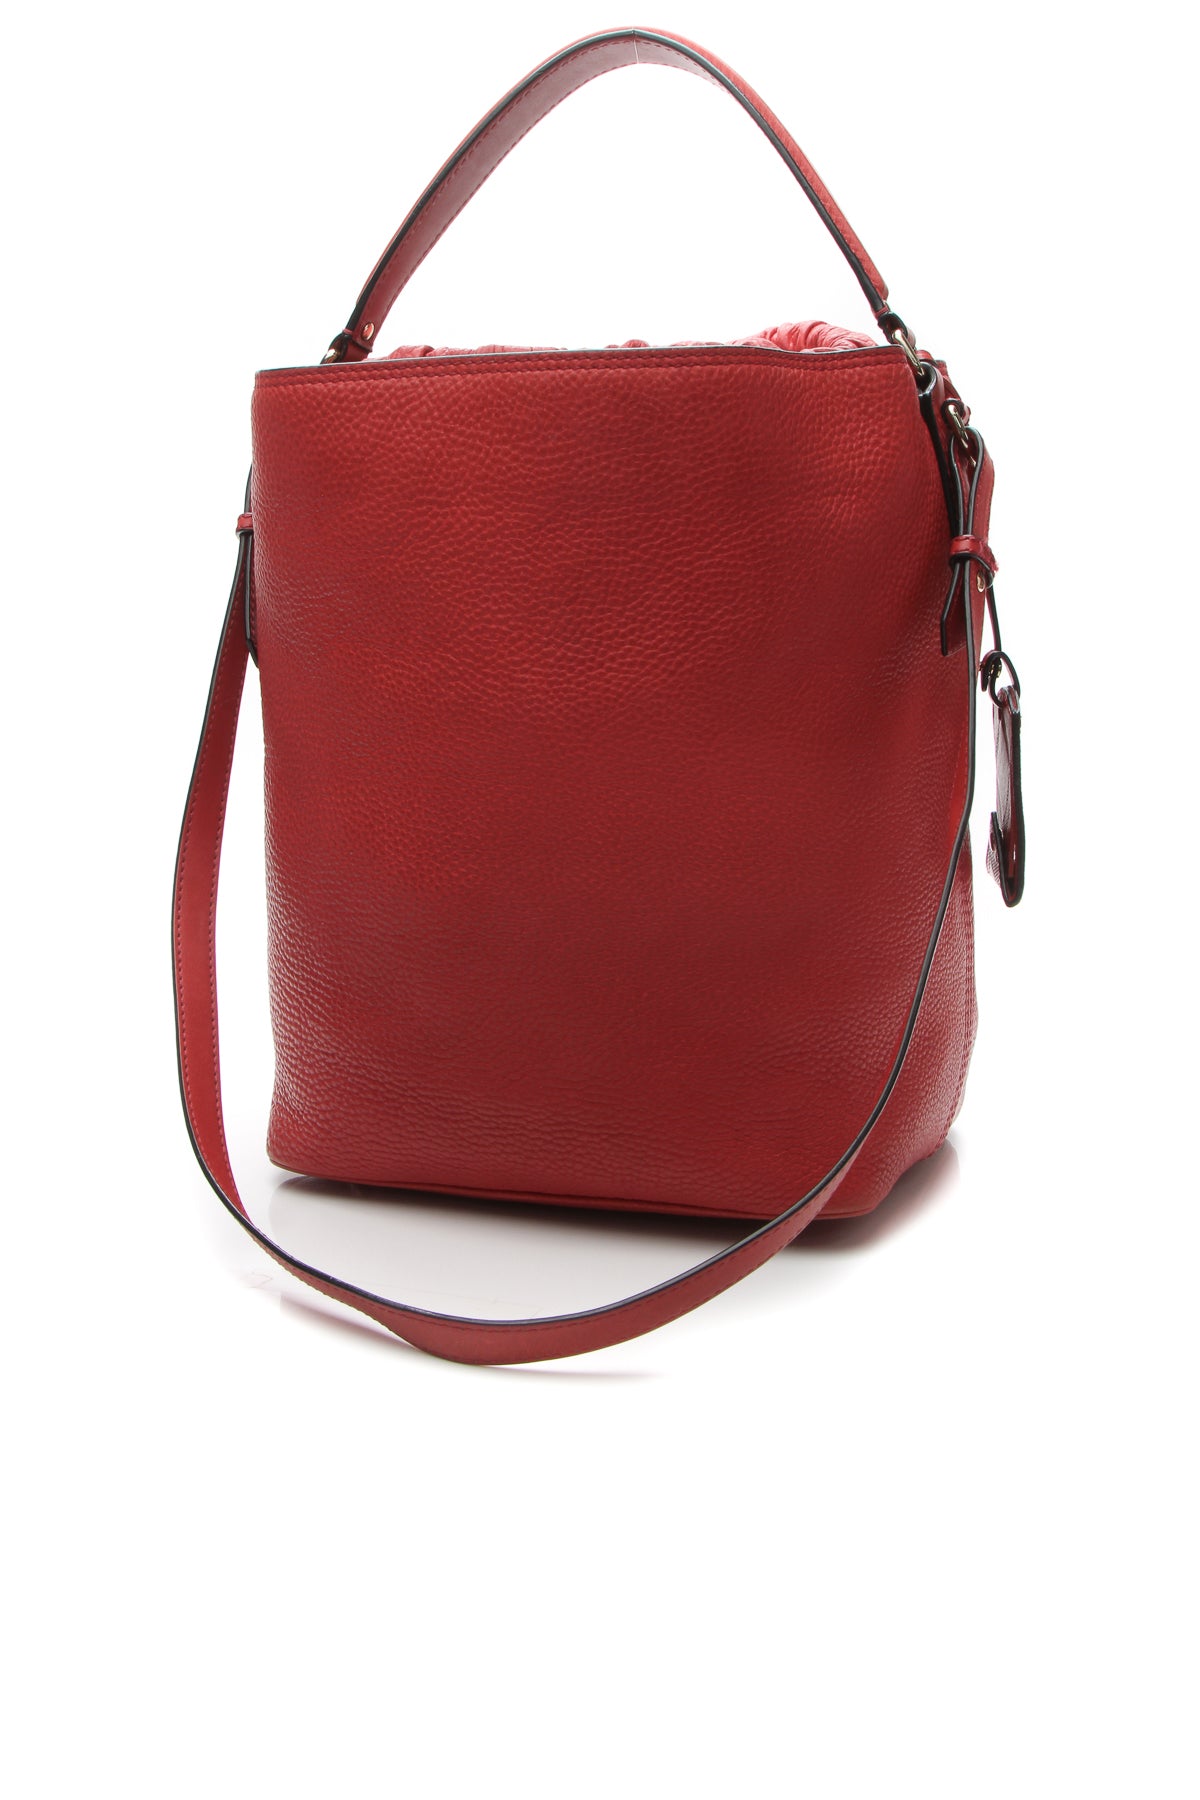 Ashby Medium Hobo Bag - Cadmium Red